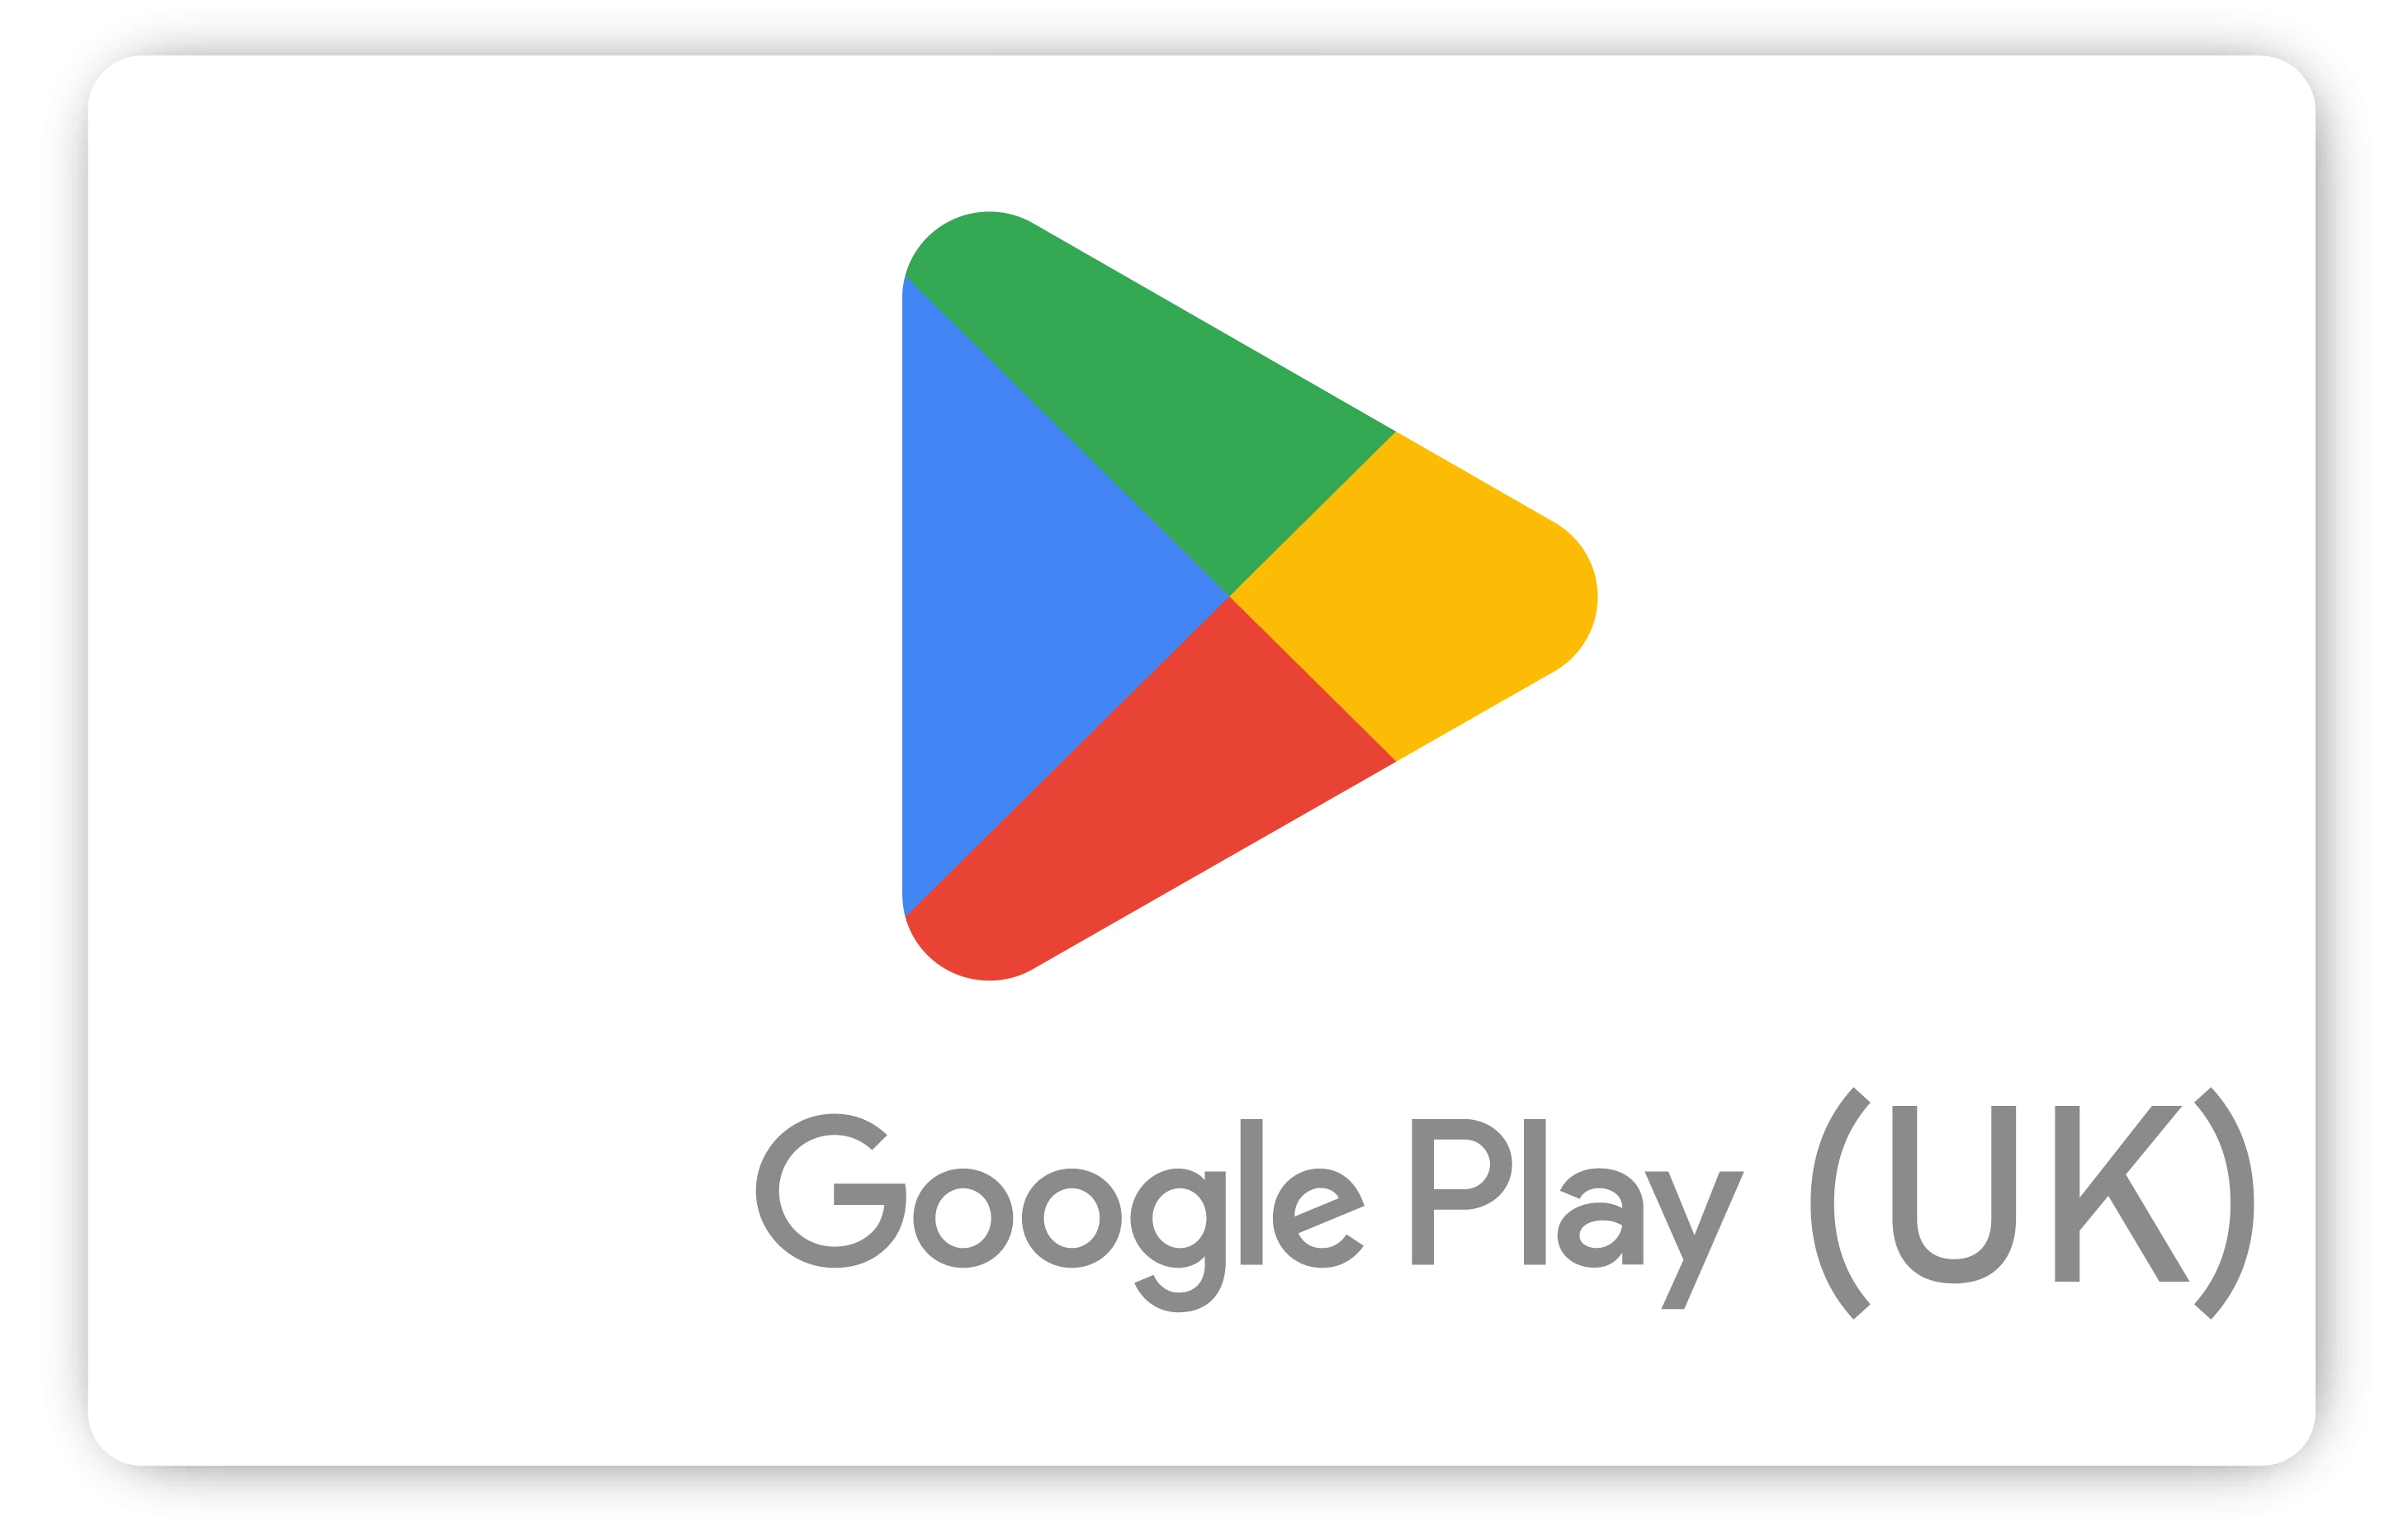 £100.00 Google Play (UK) Gift Card